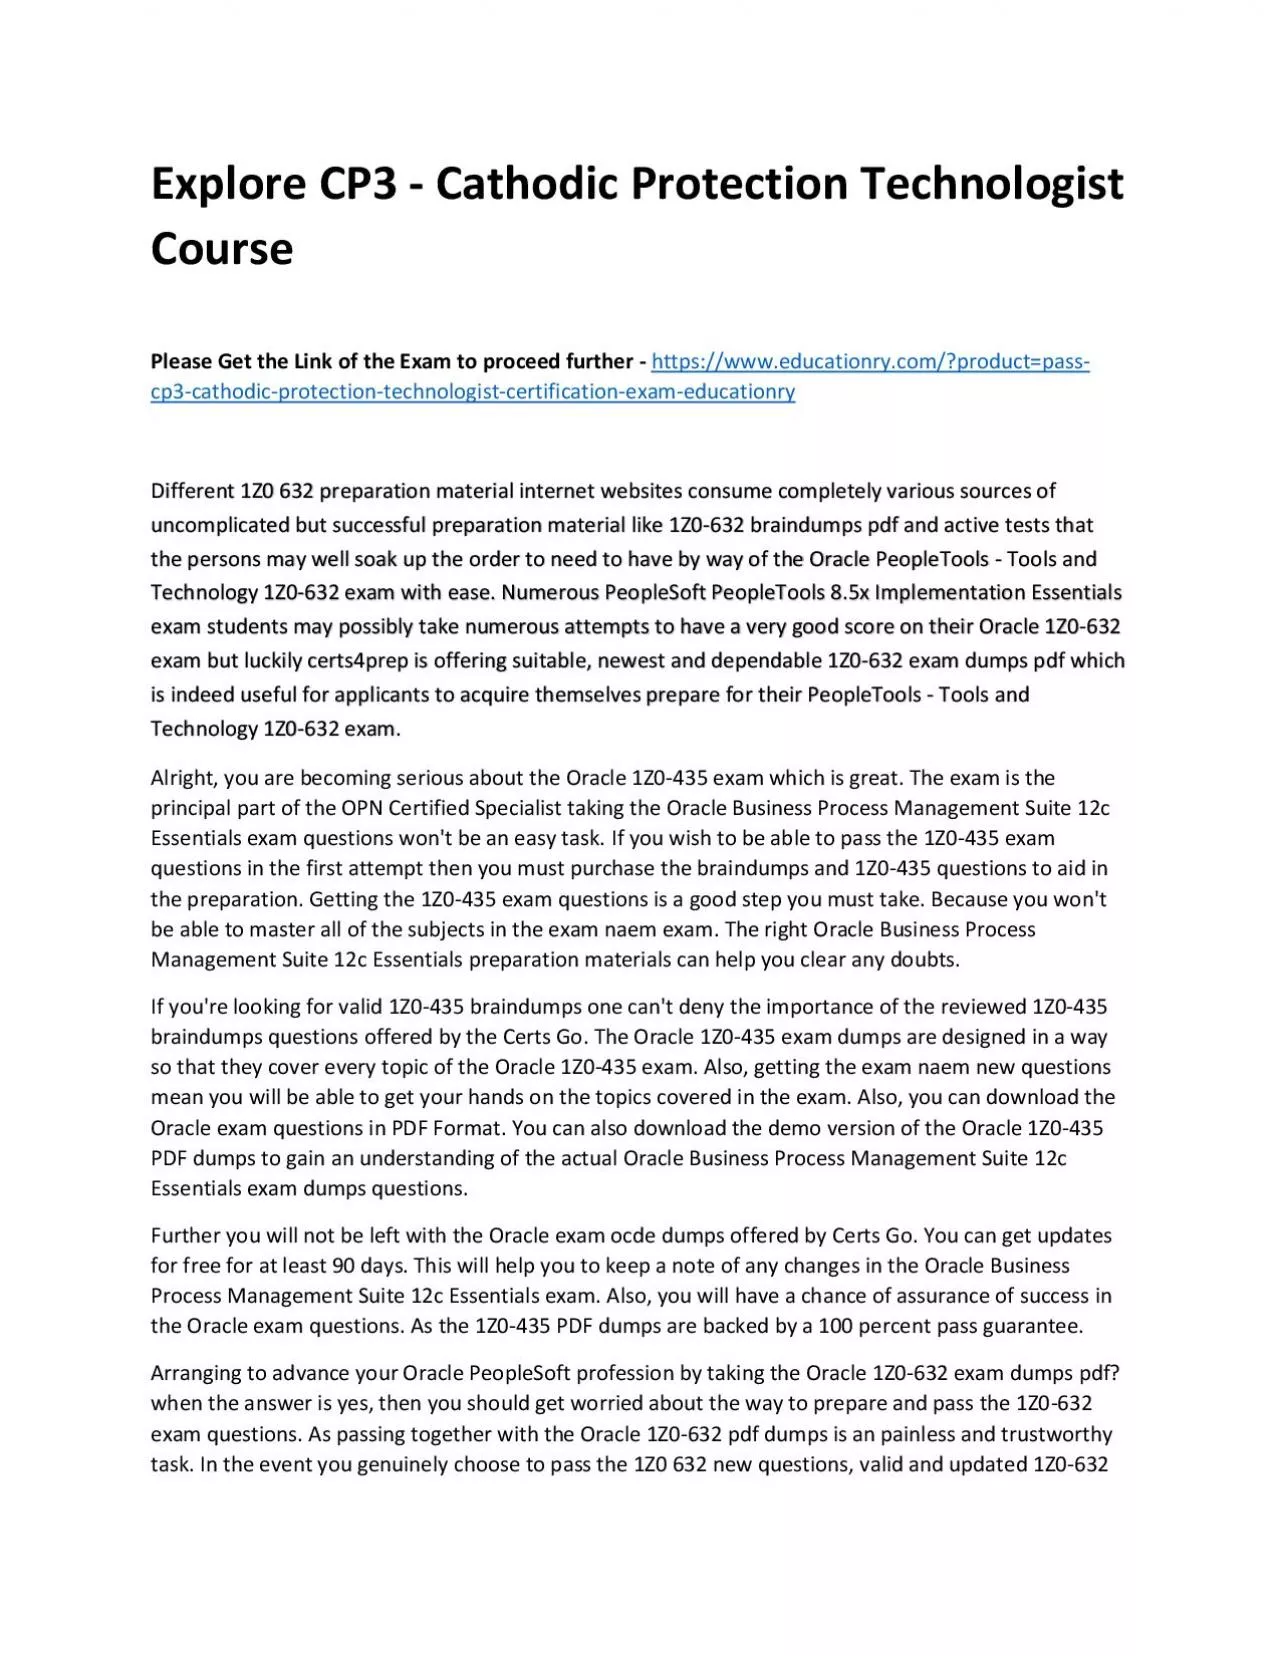 Explore CP3 - Cathodic Protection Technologist Practice Course